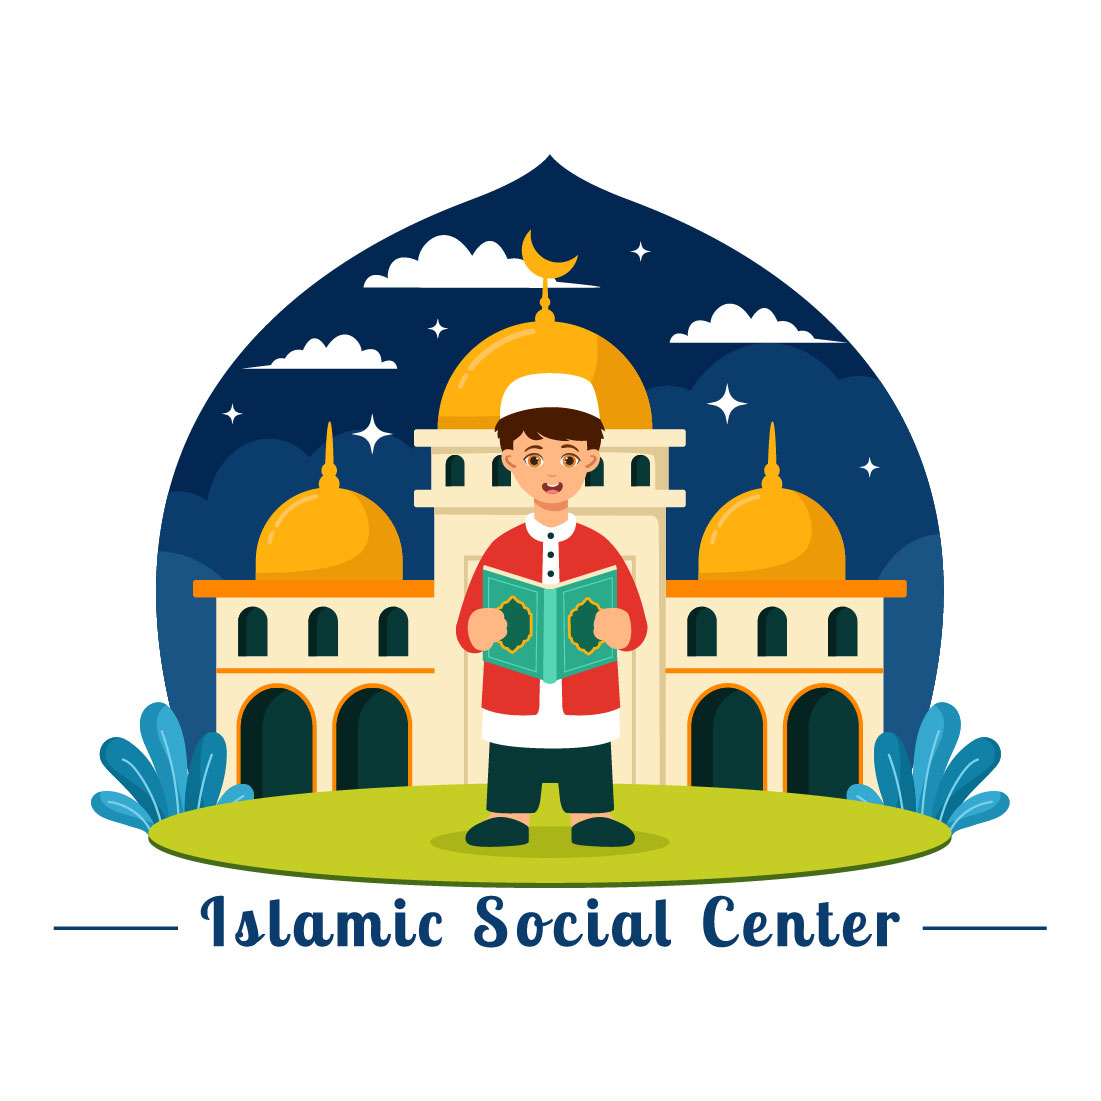 9 Islamic Social Center Illustration preview image.